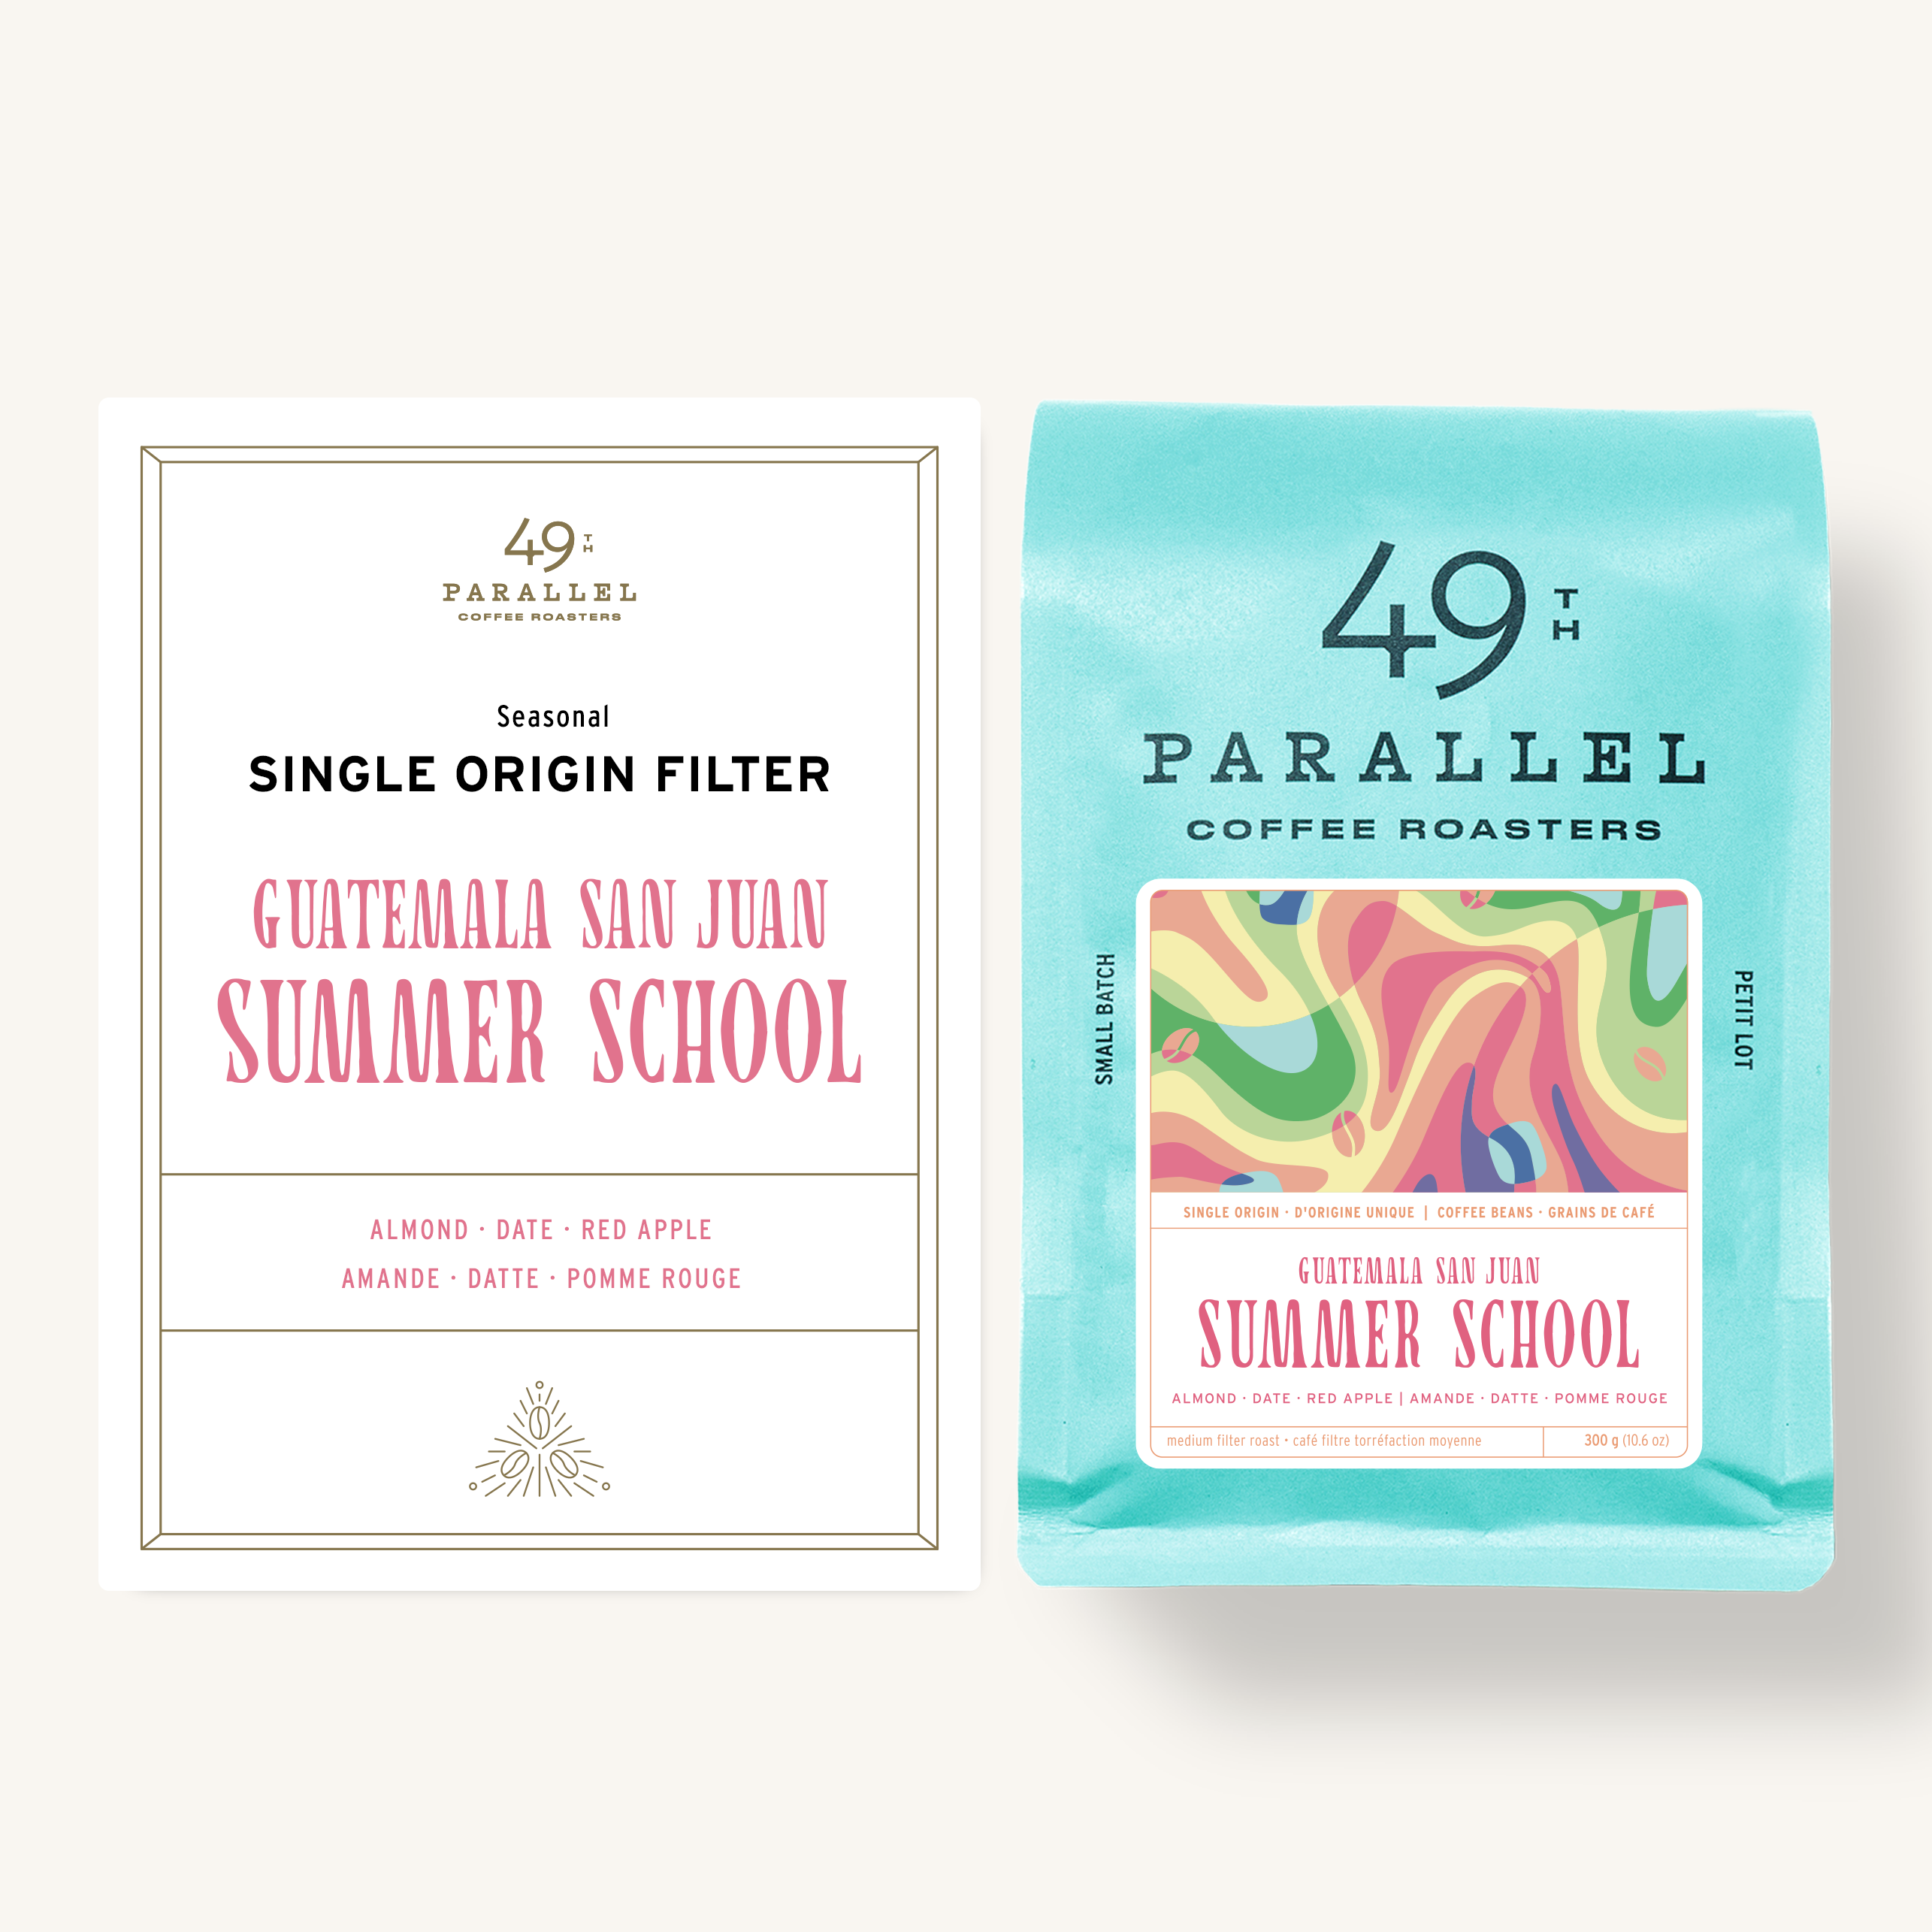 49th Parallel Coffee Roasters - Guatemala San Juan Summer School Single Origin Filter